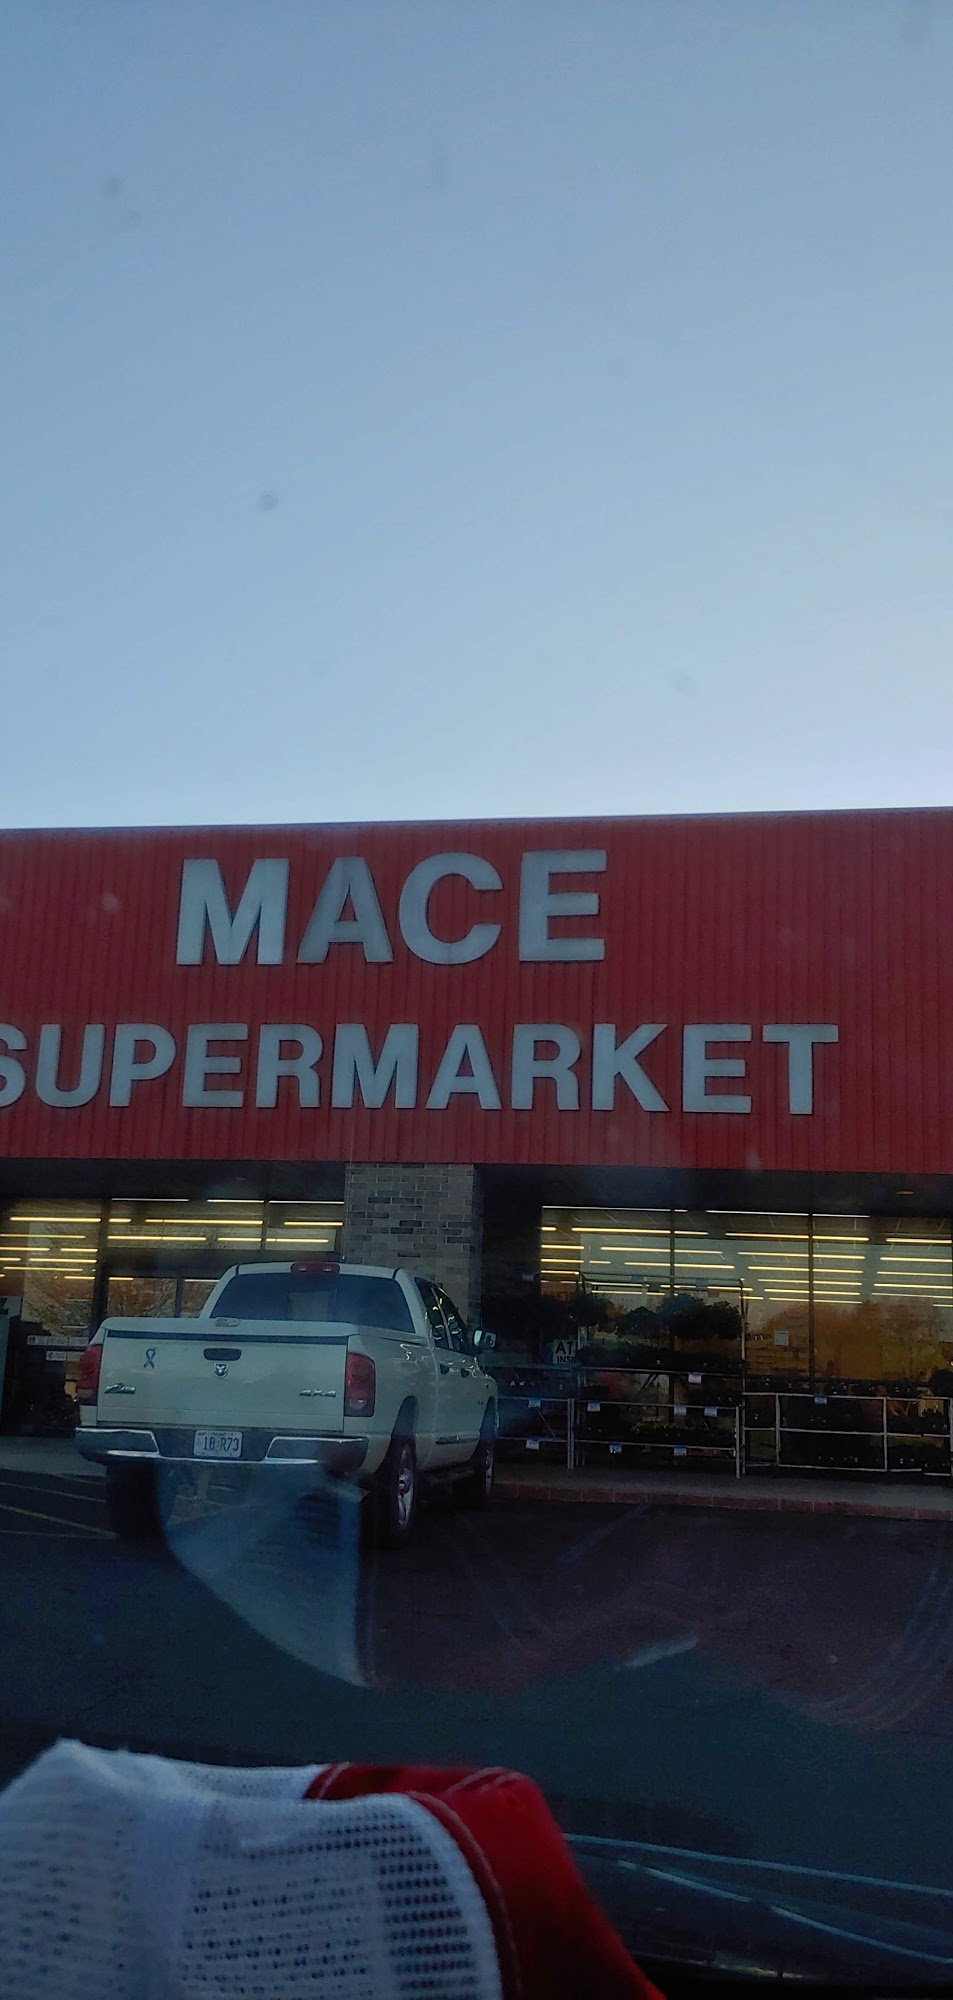 Mace Supermarkets